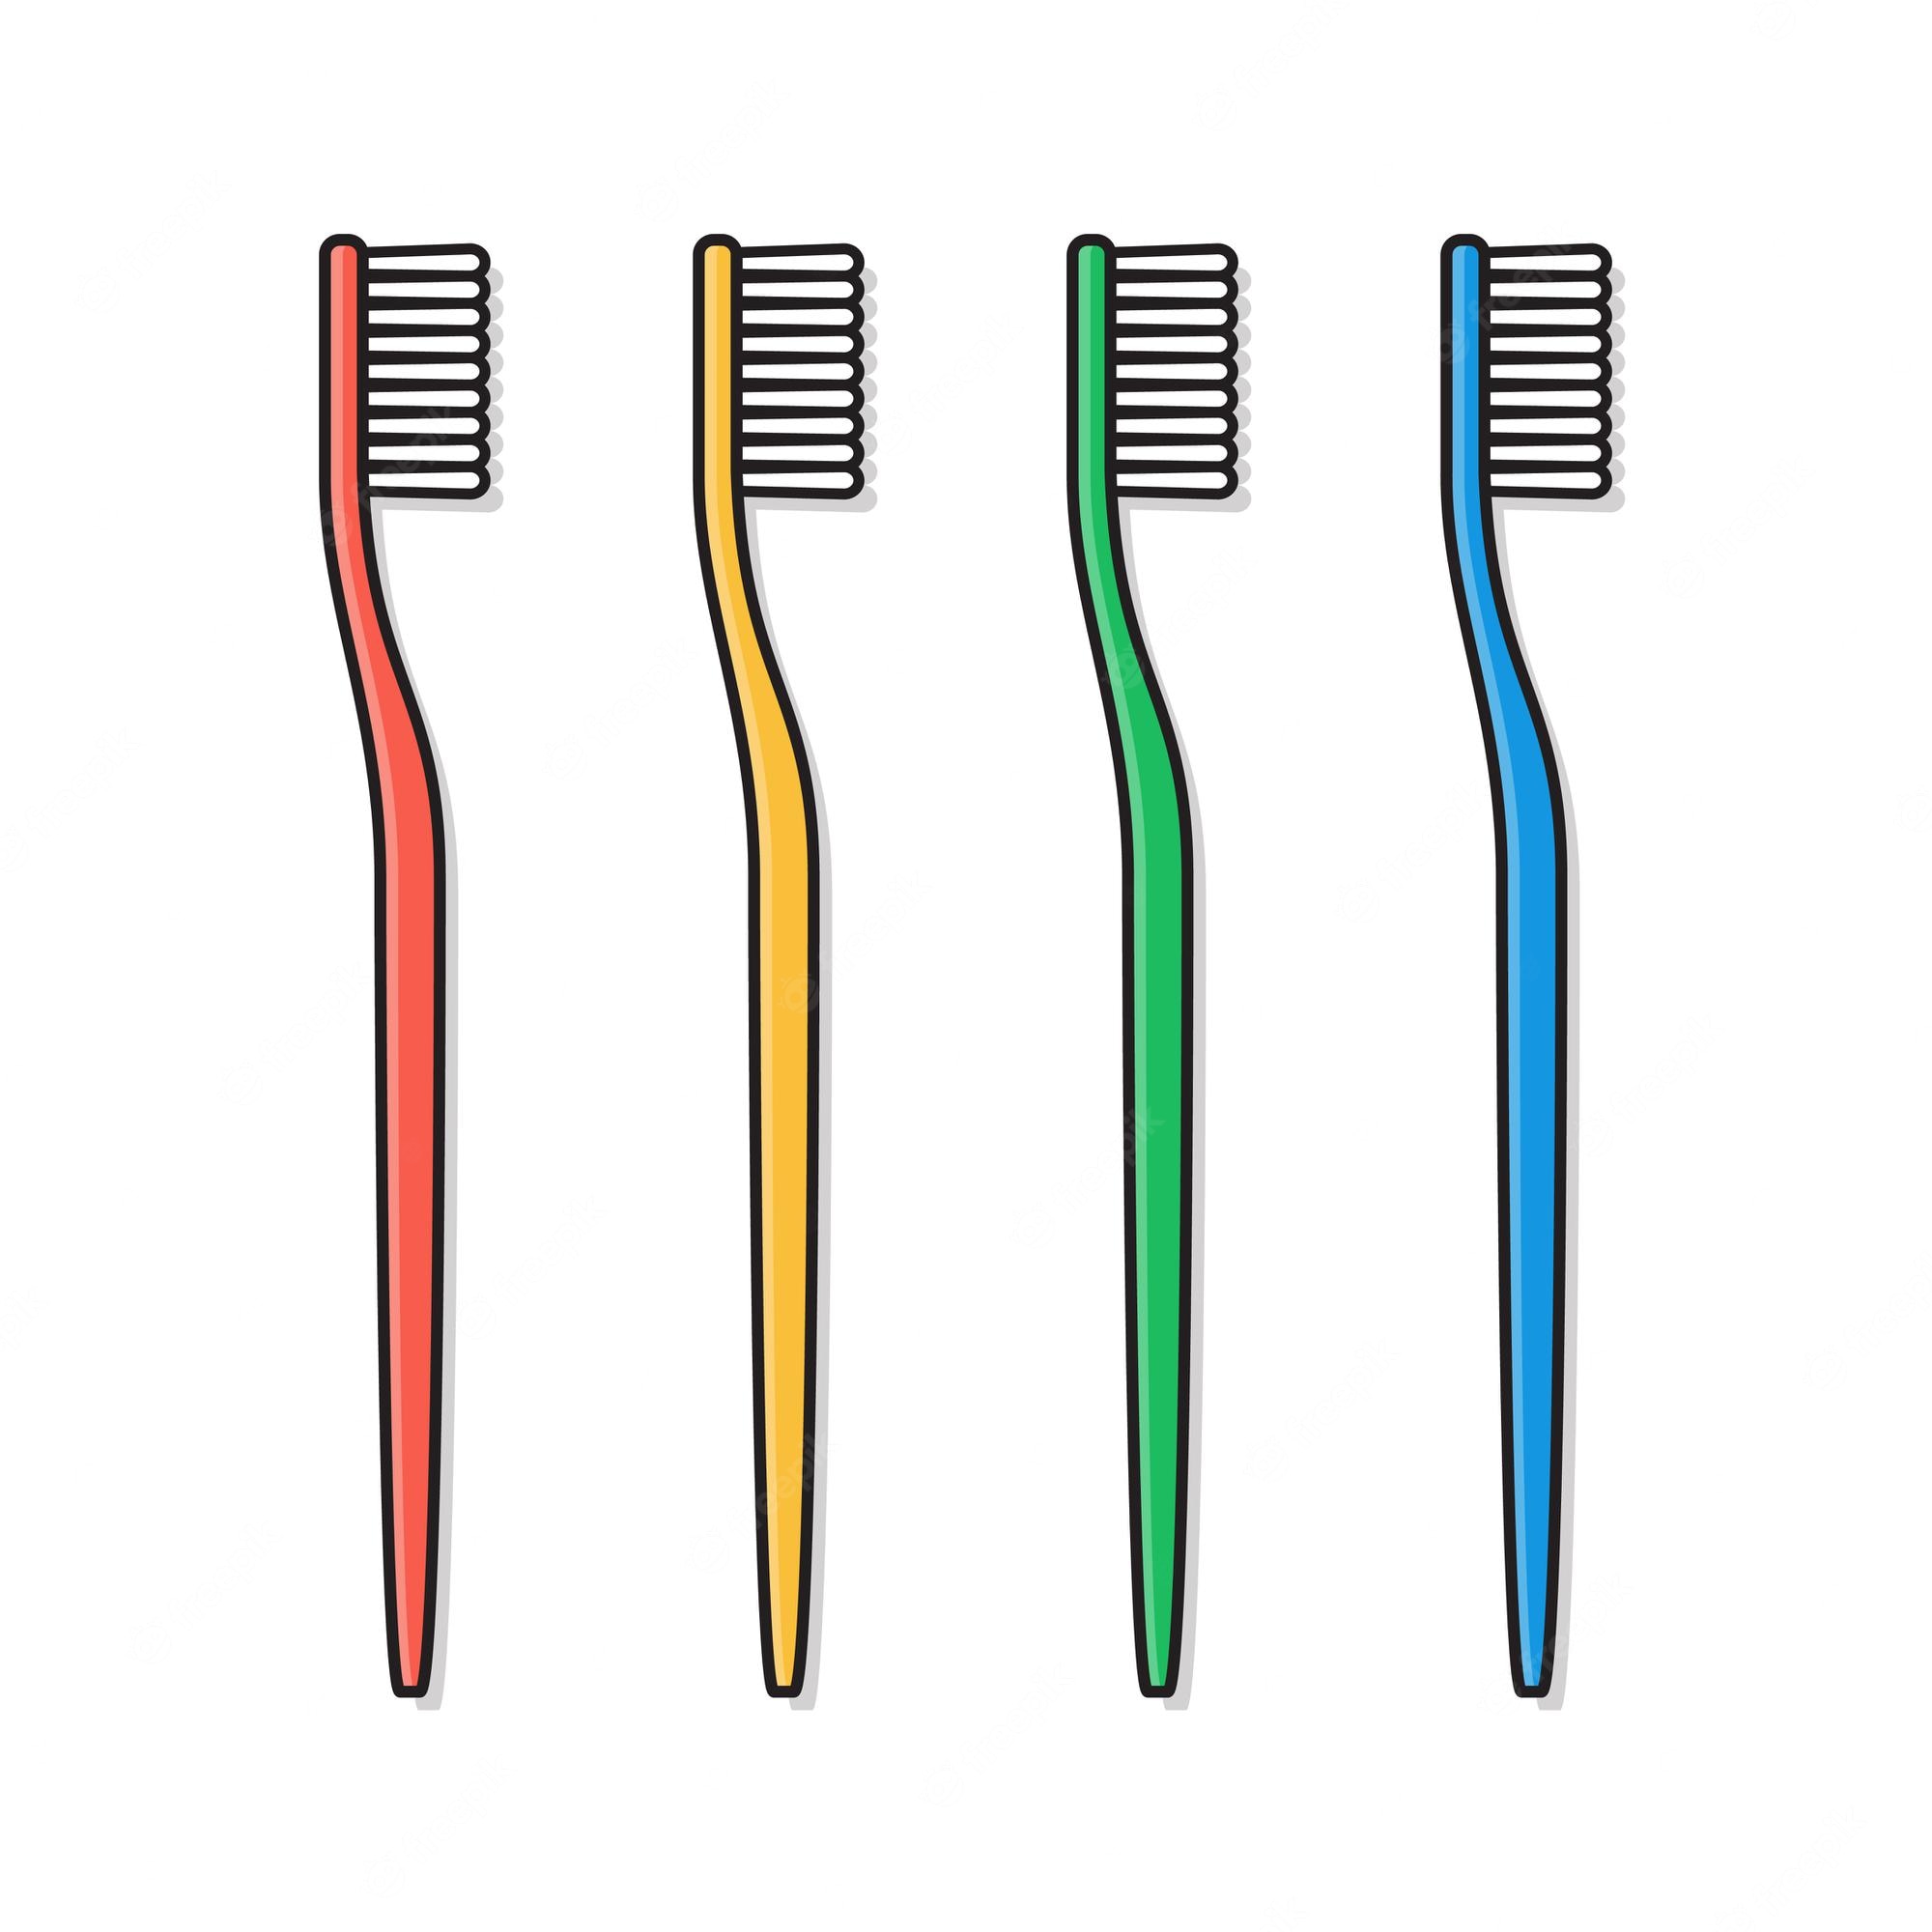 tooth brush clip art